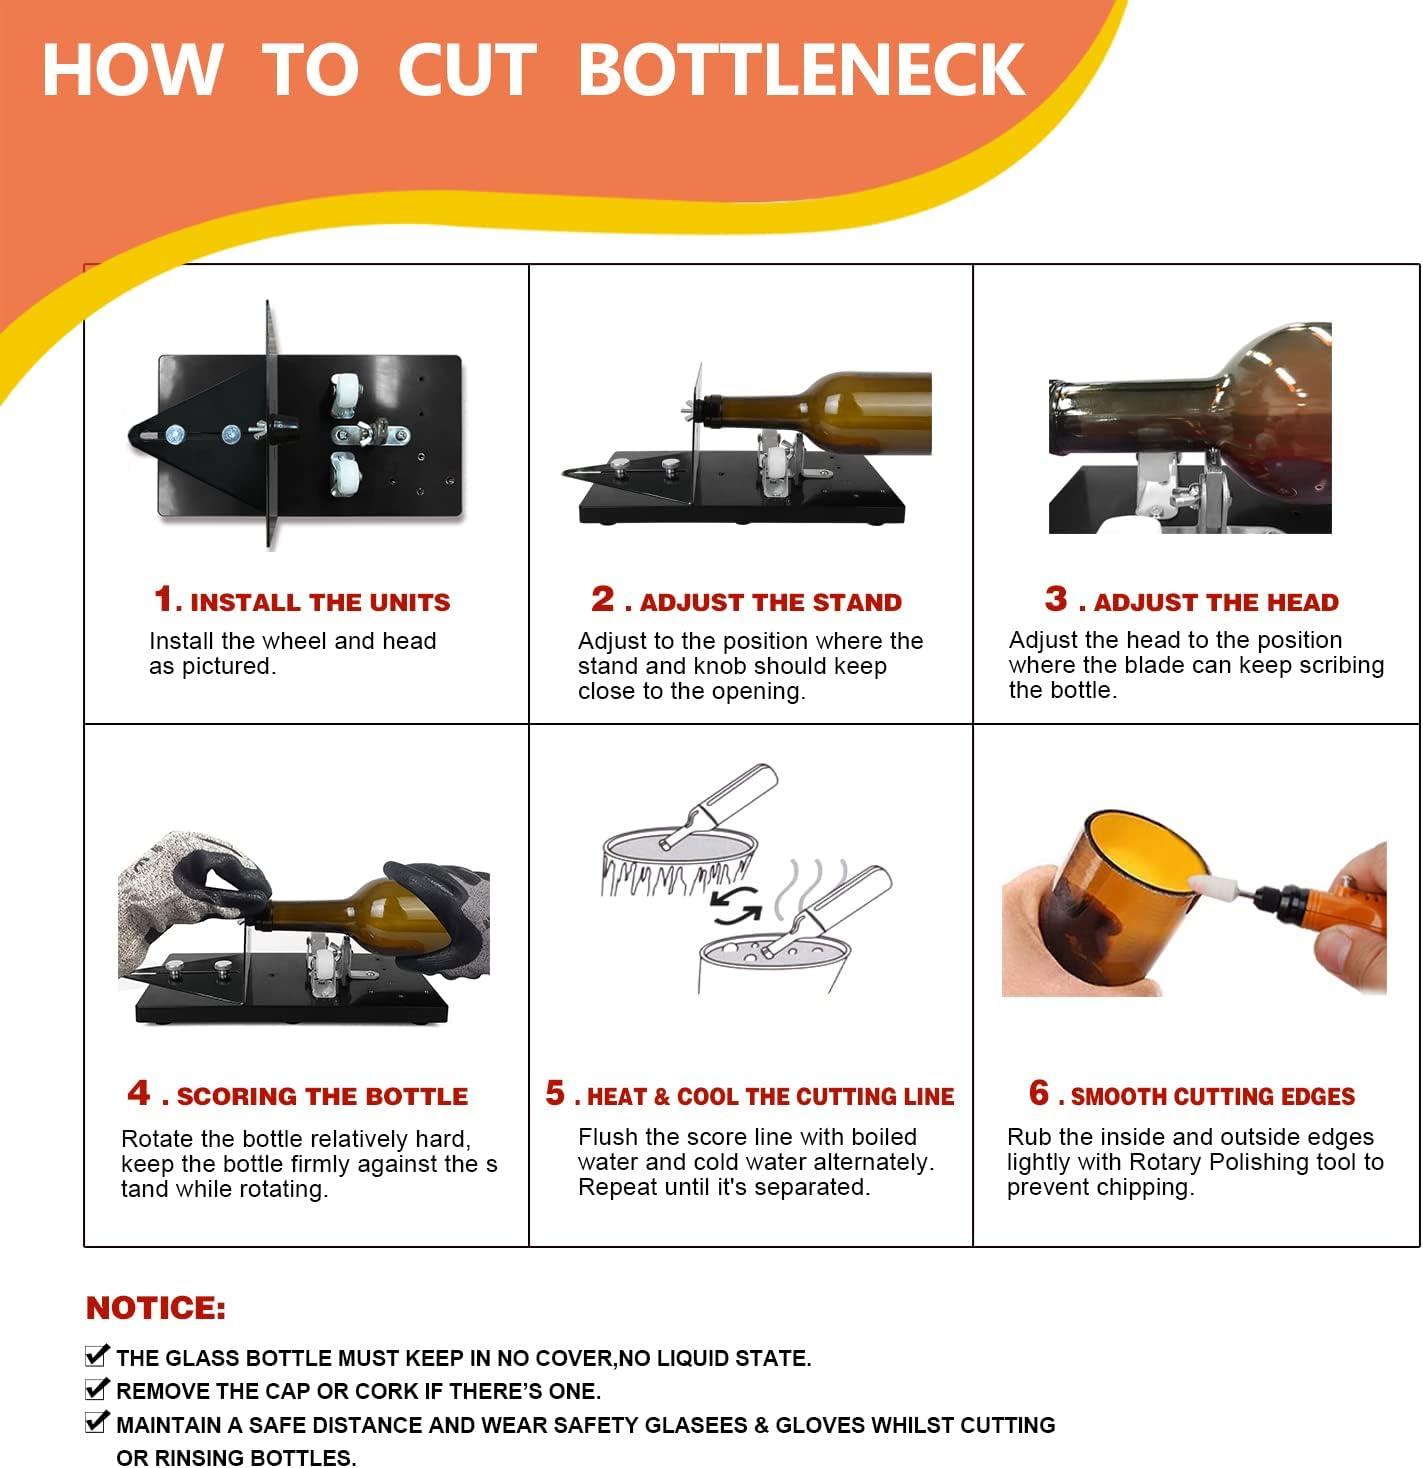 Bottle Cutter Genround Upgrade 2.1 Glass Bottle Cutter Machine for